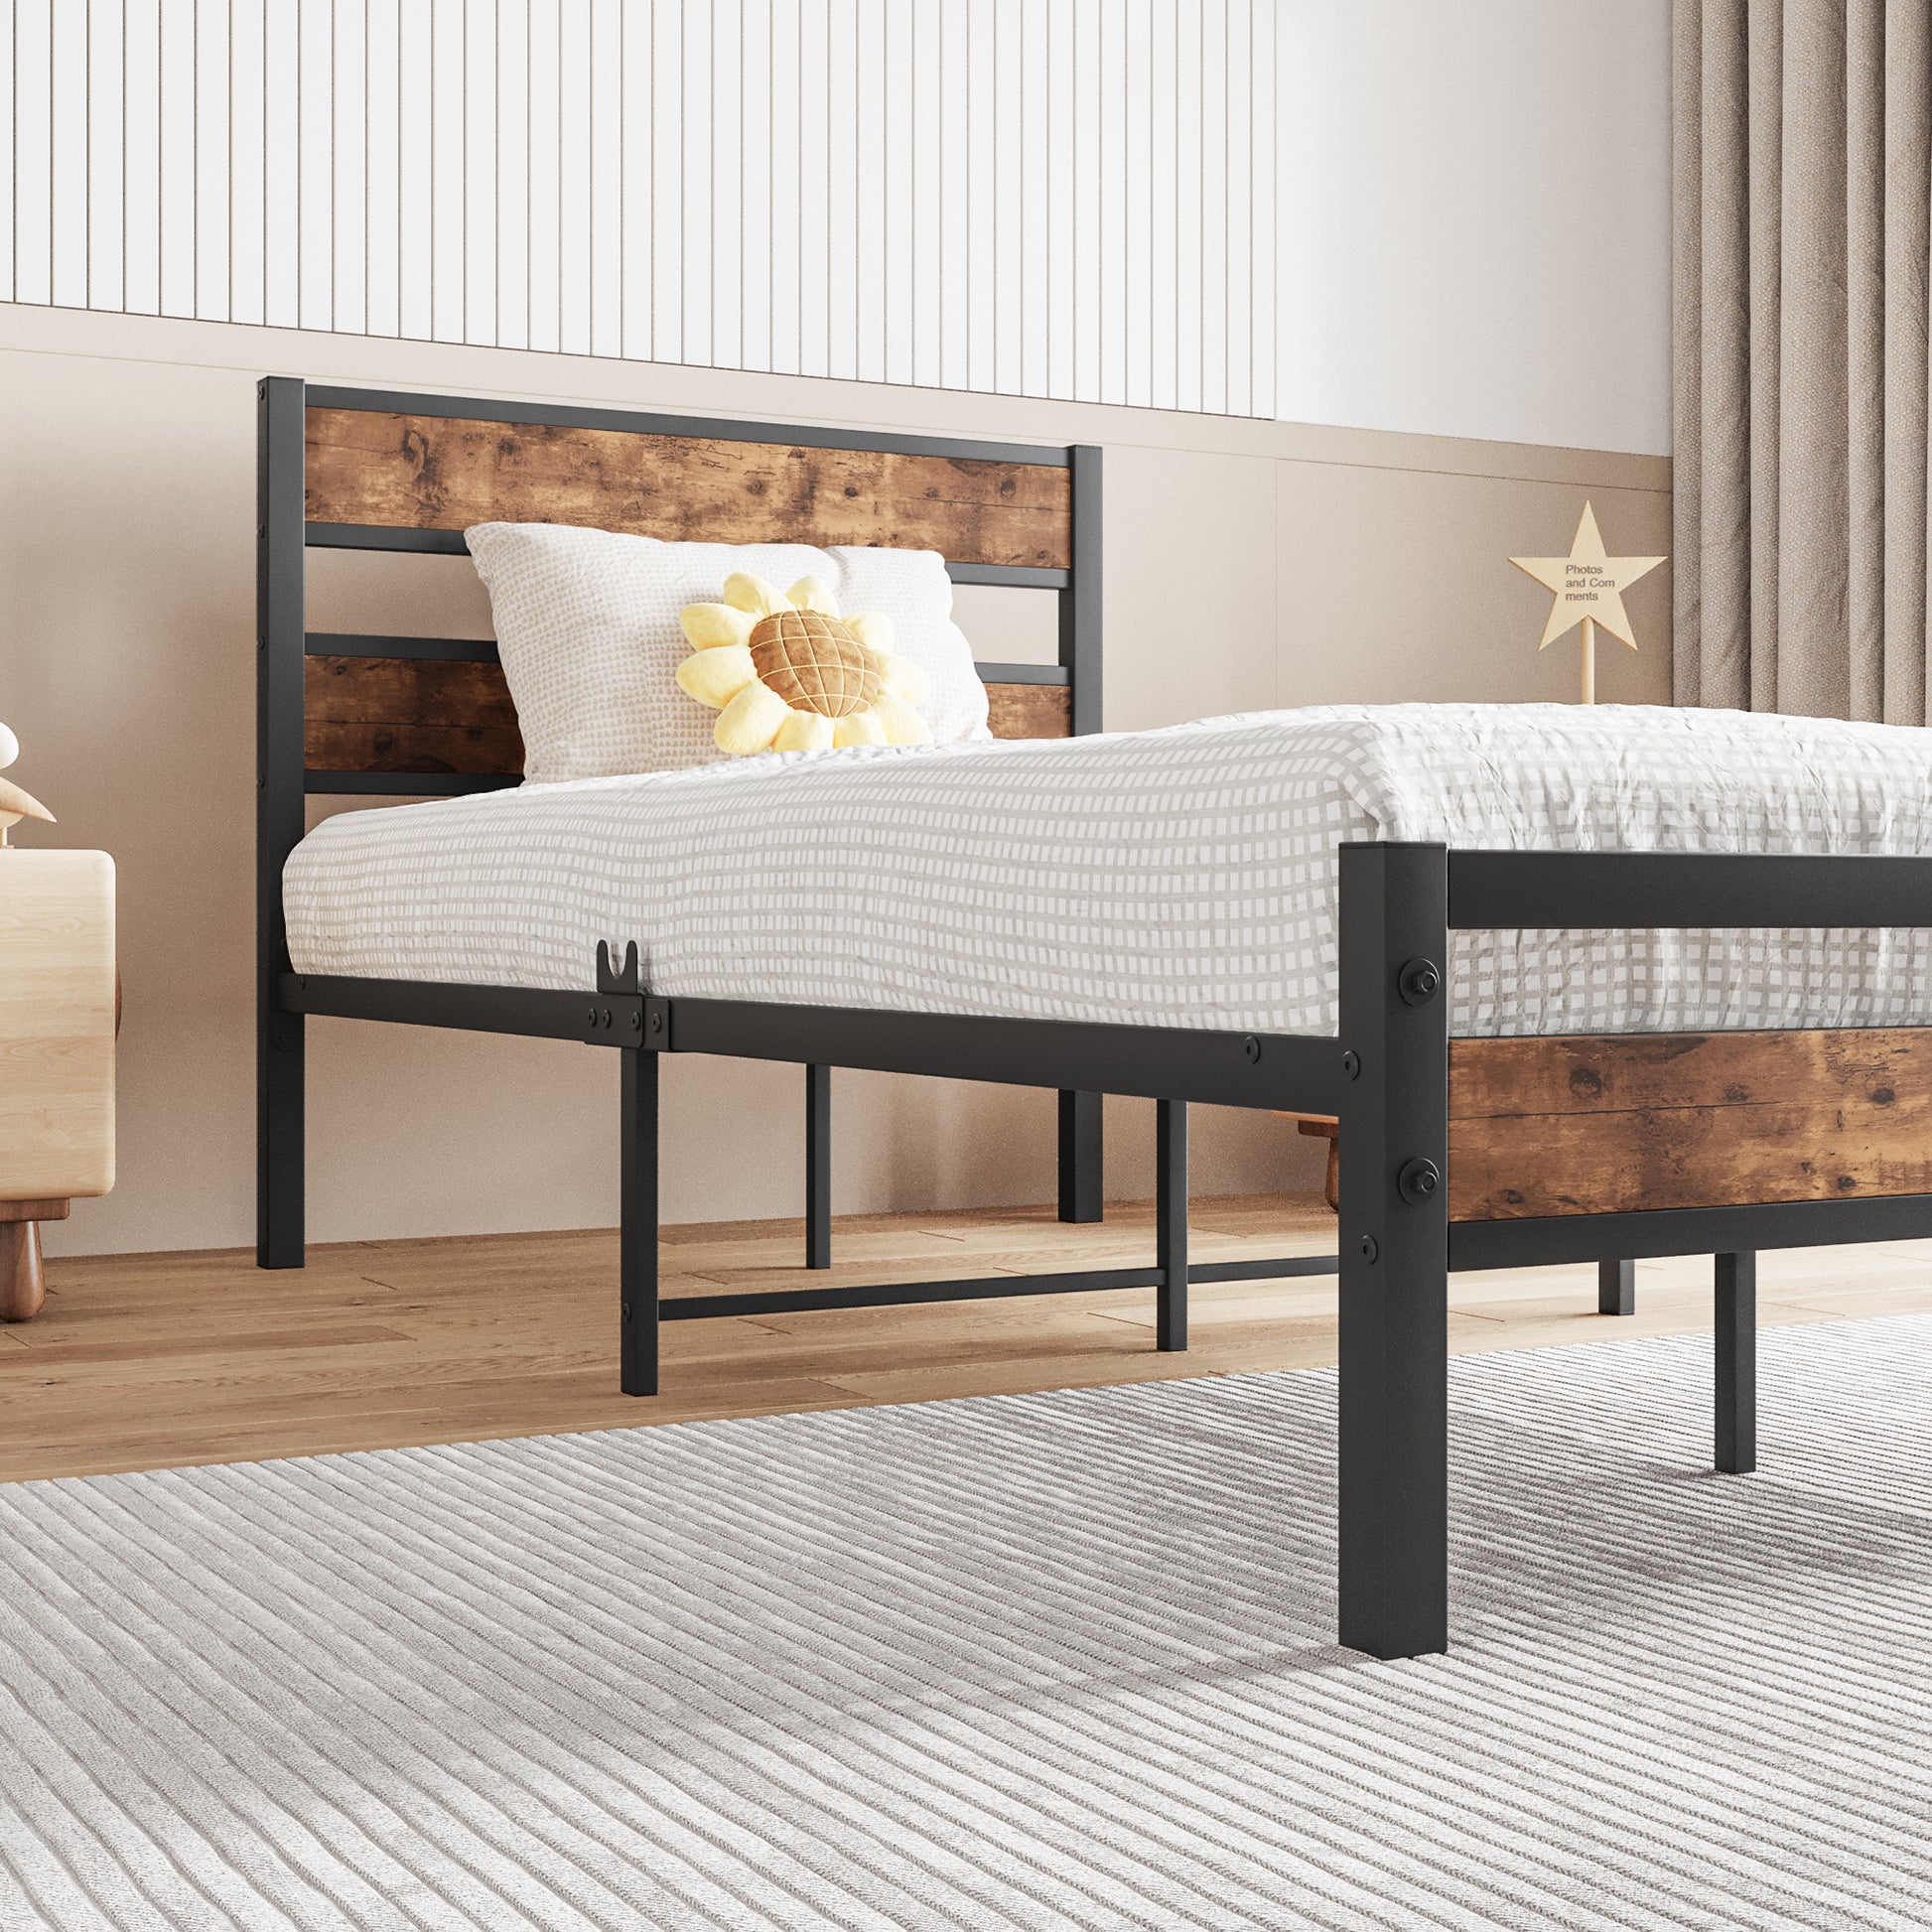 Twin Size Platform Bed Frame With Rustic Vintage